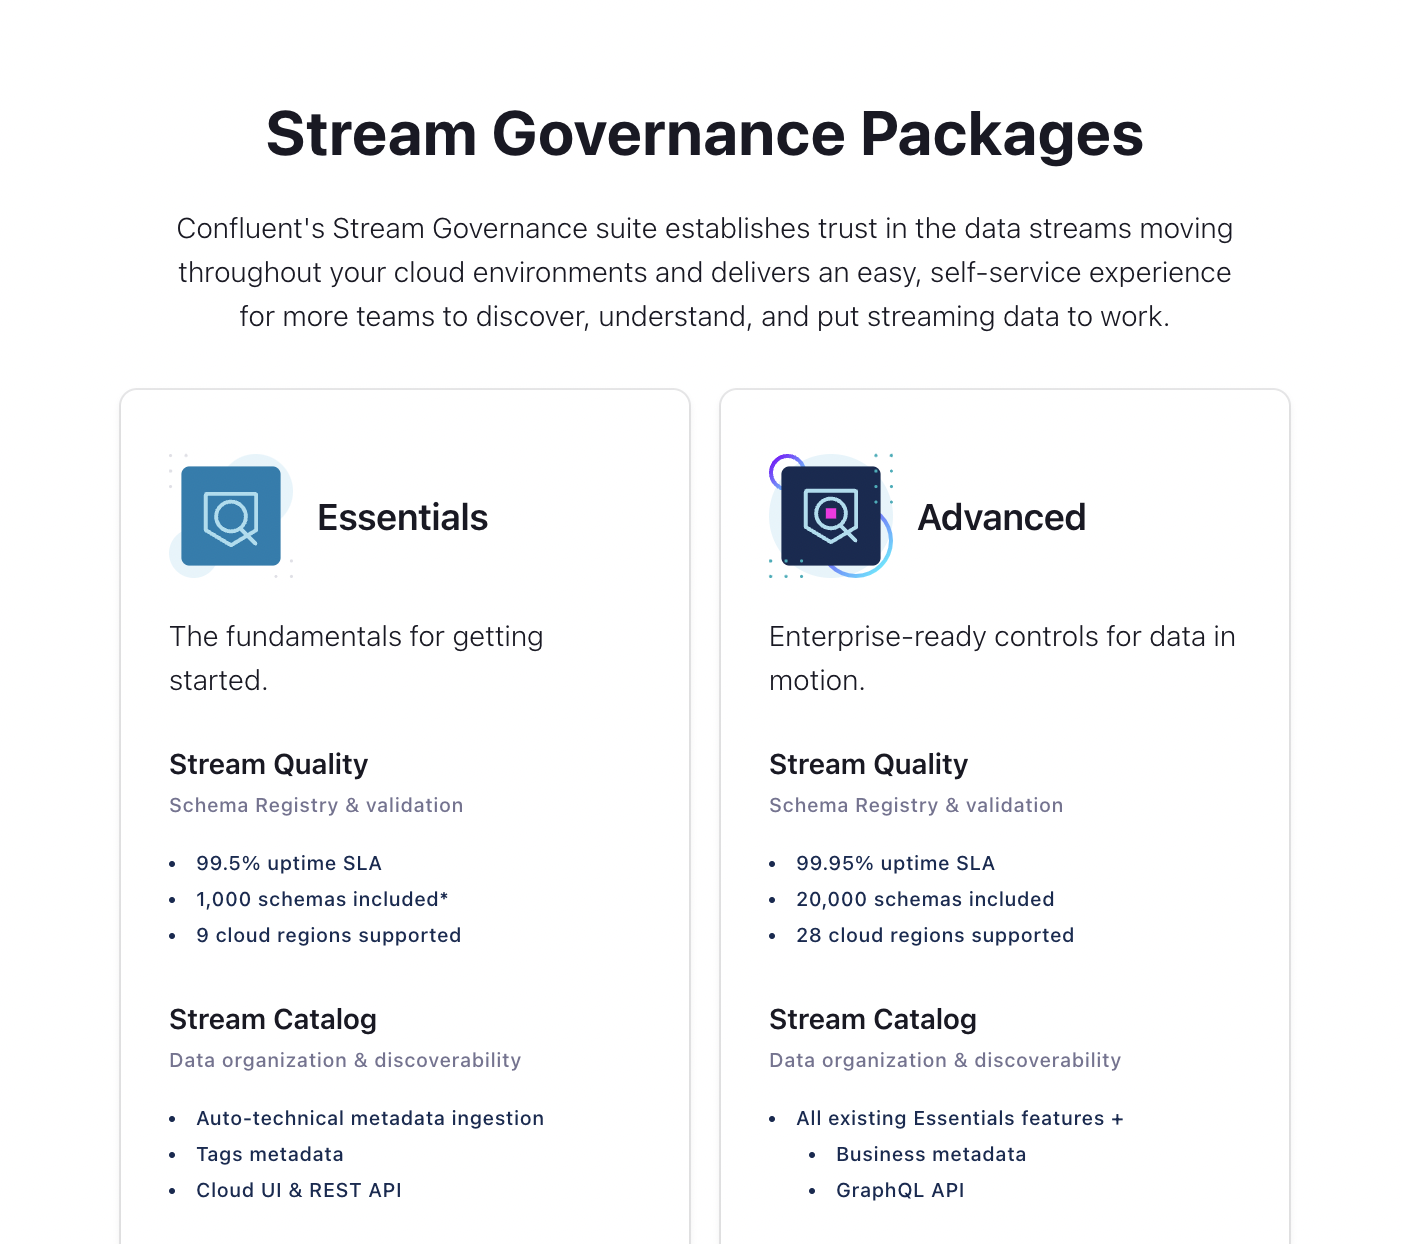 Choosing a Stream Governance Package